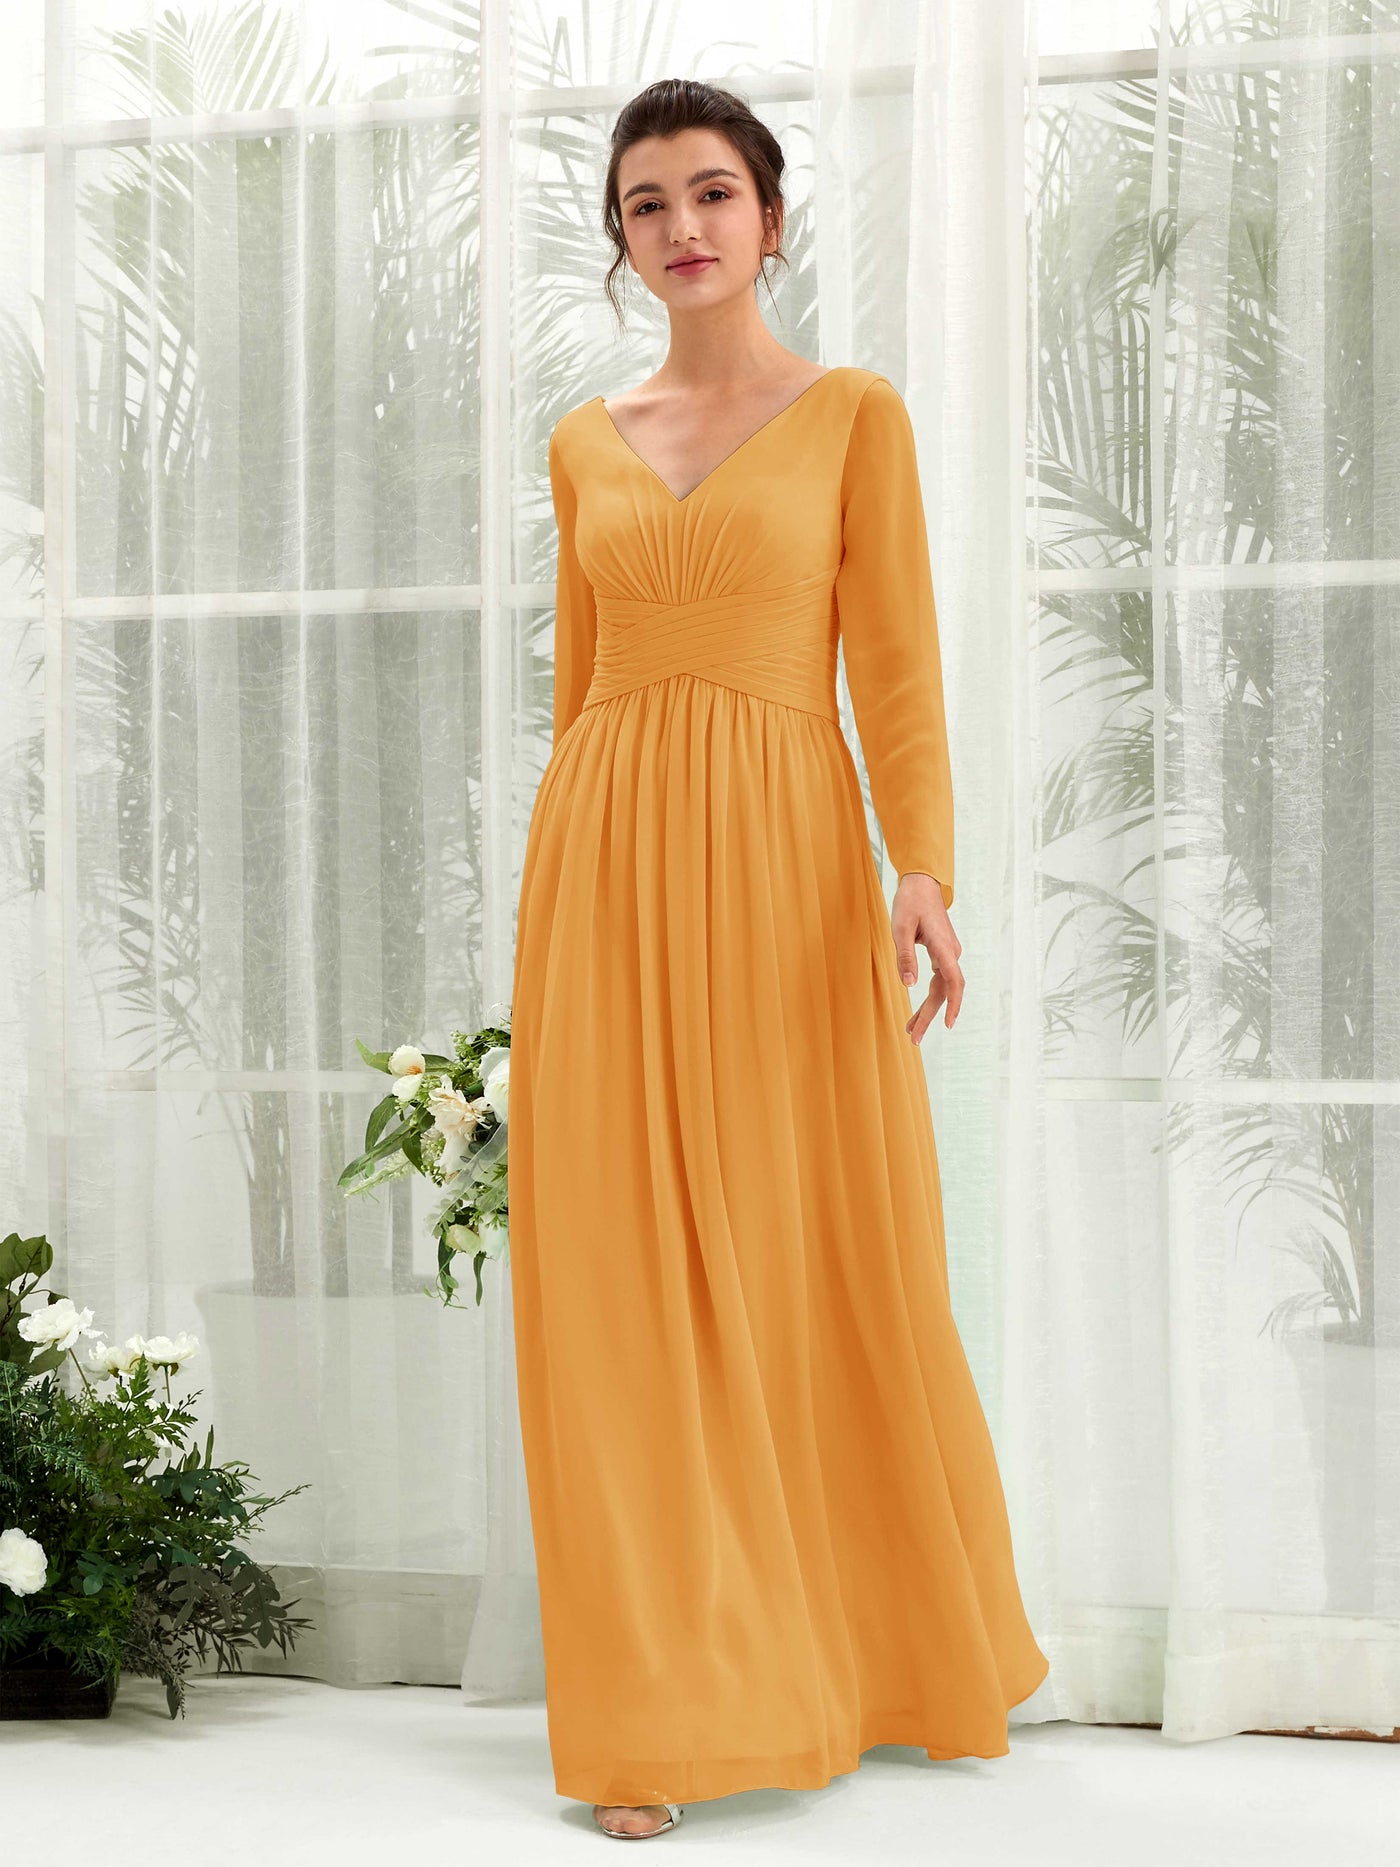 Mango Bridesmaid Dresses Bridesmaid Dress A-line Chiffon V-neck Full Length Long Sleeves Wedding Party Dress (81220302)#color_mango